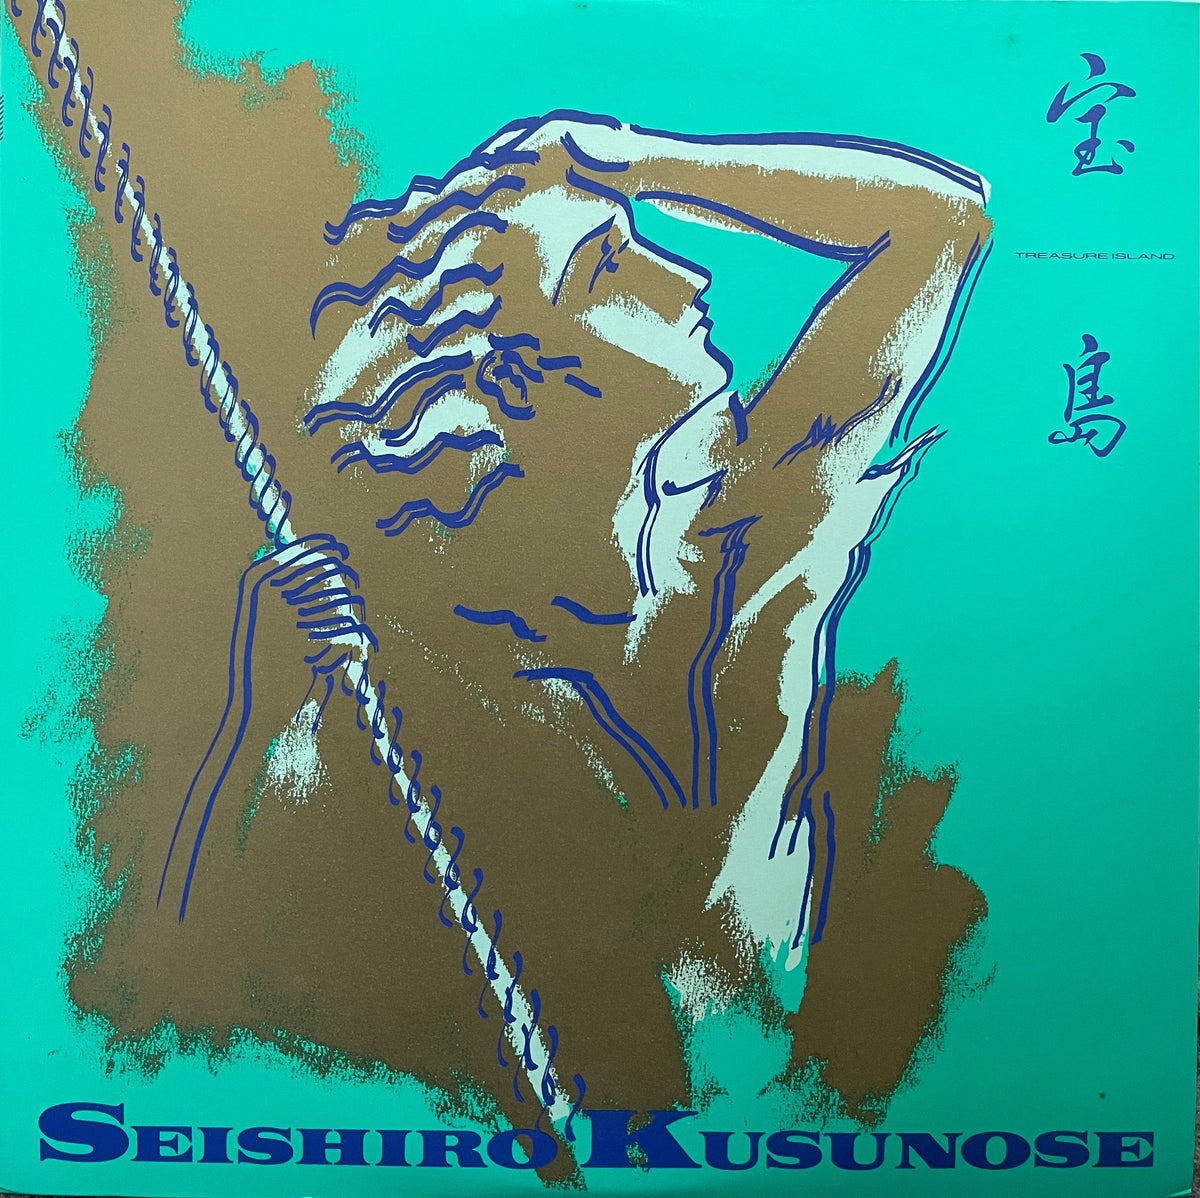 Seishiro Kusunose u003d 楠瀬誠志郎 – 宝島 -Treasure Island- – Galapagos Records